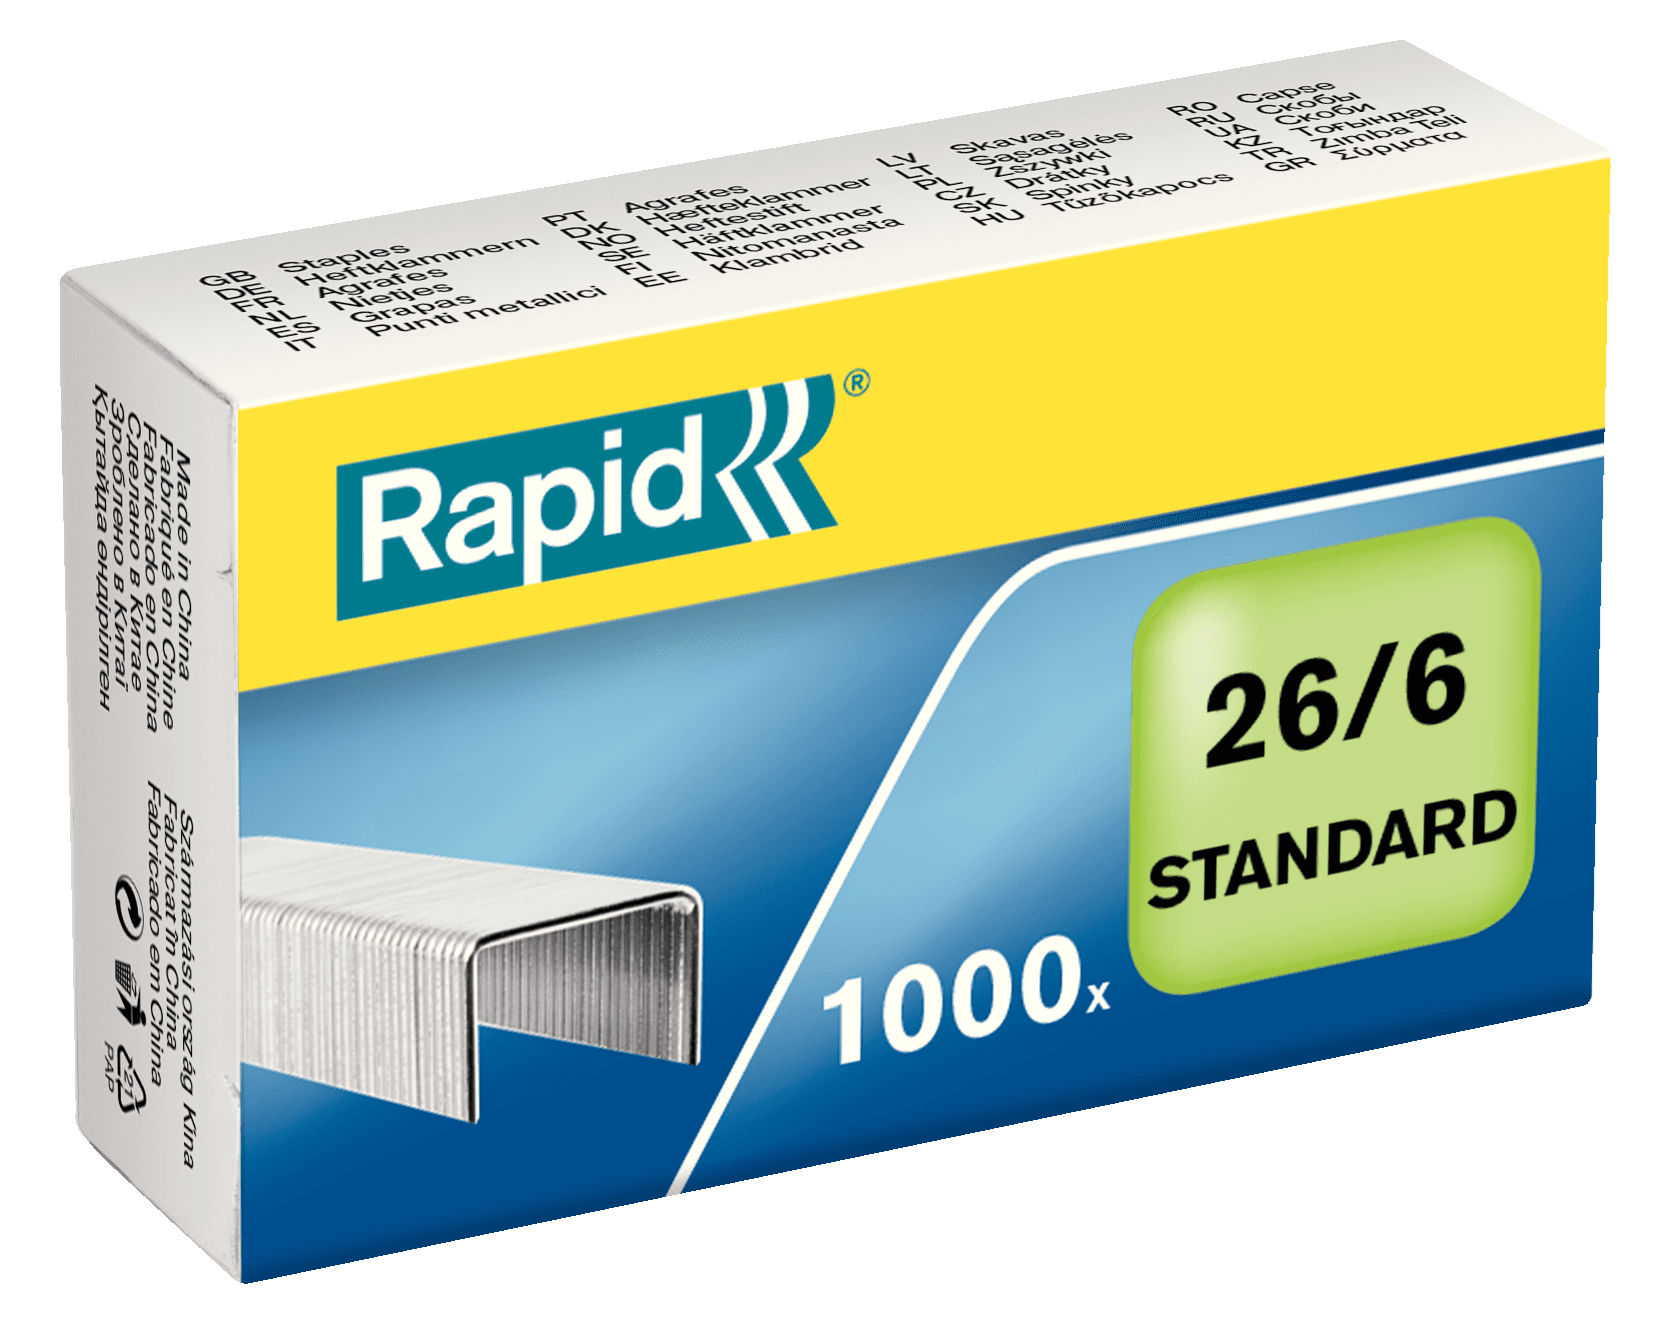 Rapid Standard Staples 26/6 - Staples and Accessories | RAPID